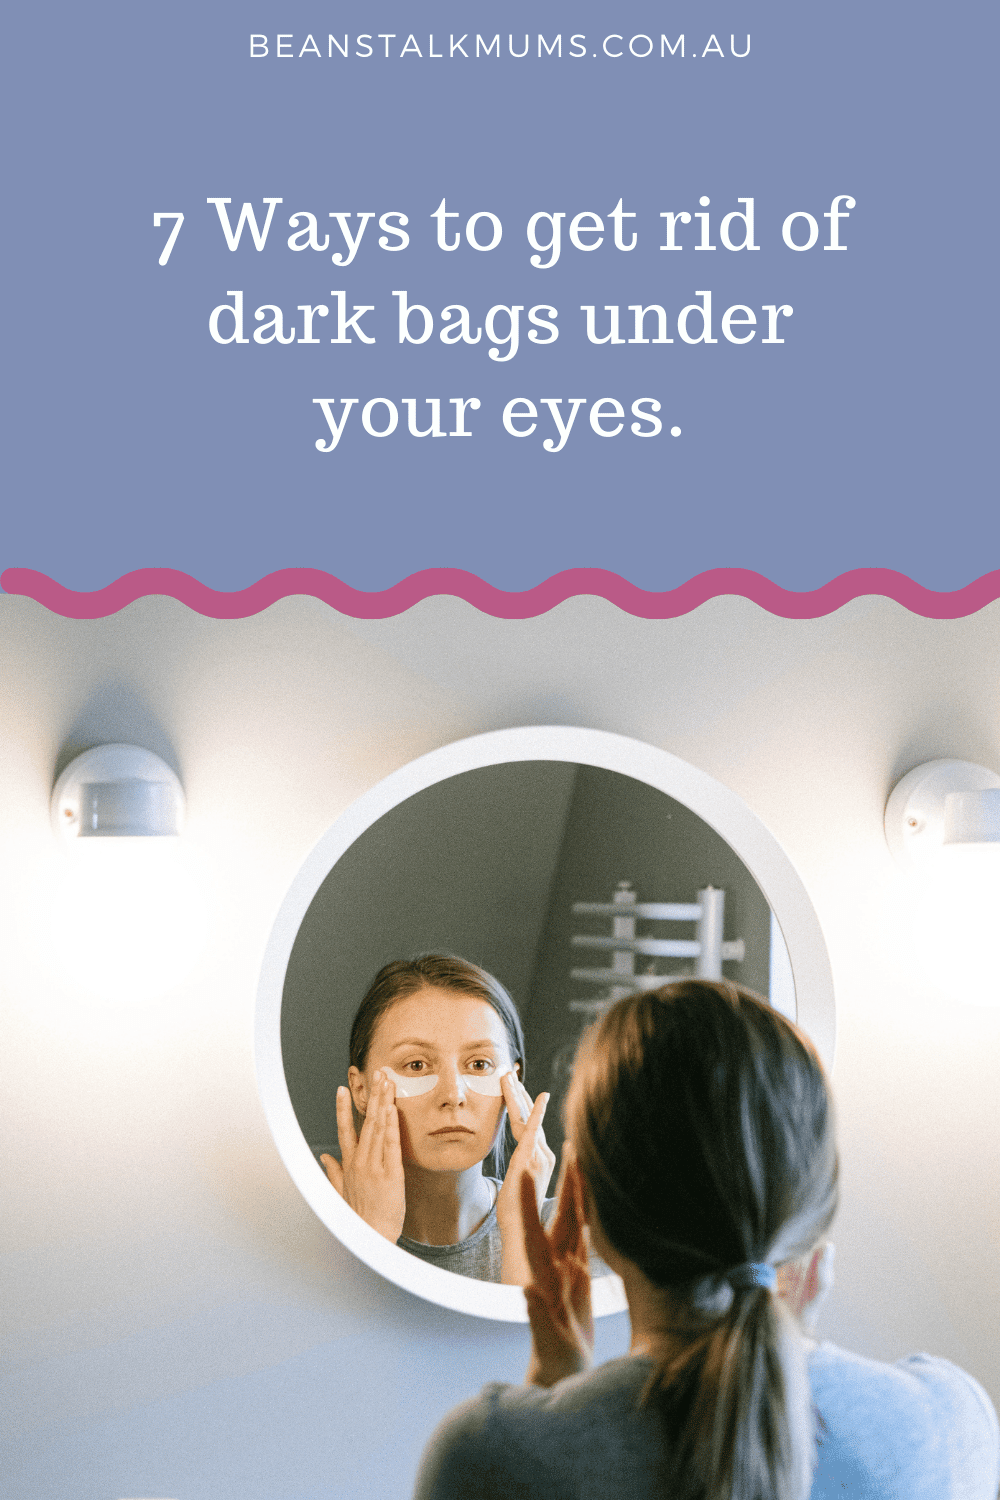 Dark bags under eyes | Beanstalk Single Mums Pinterest